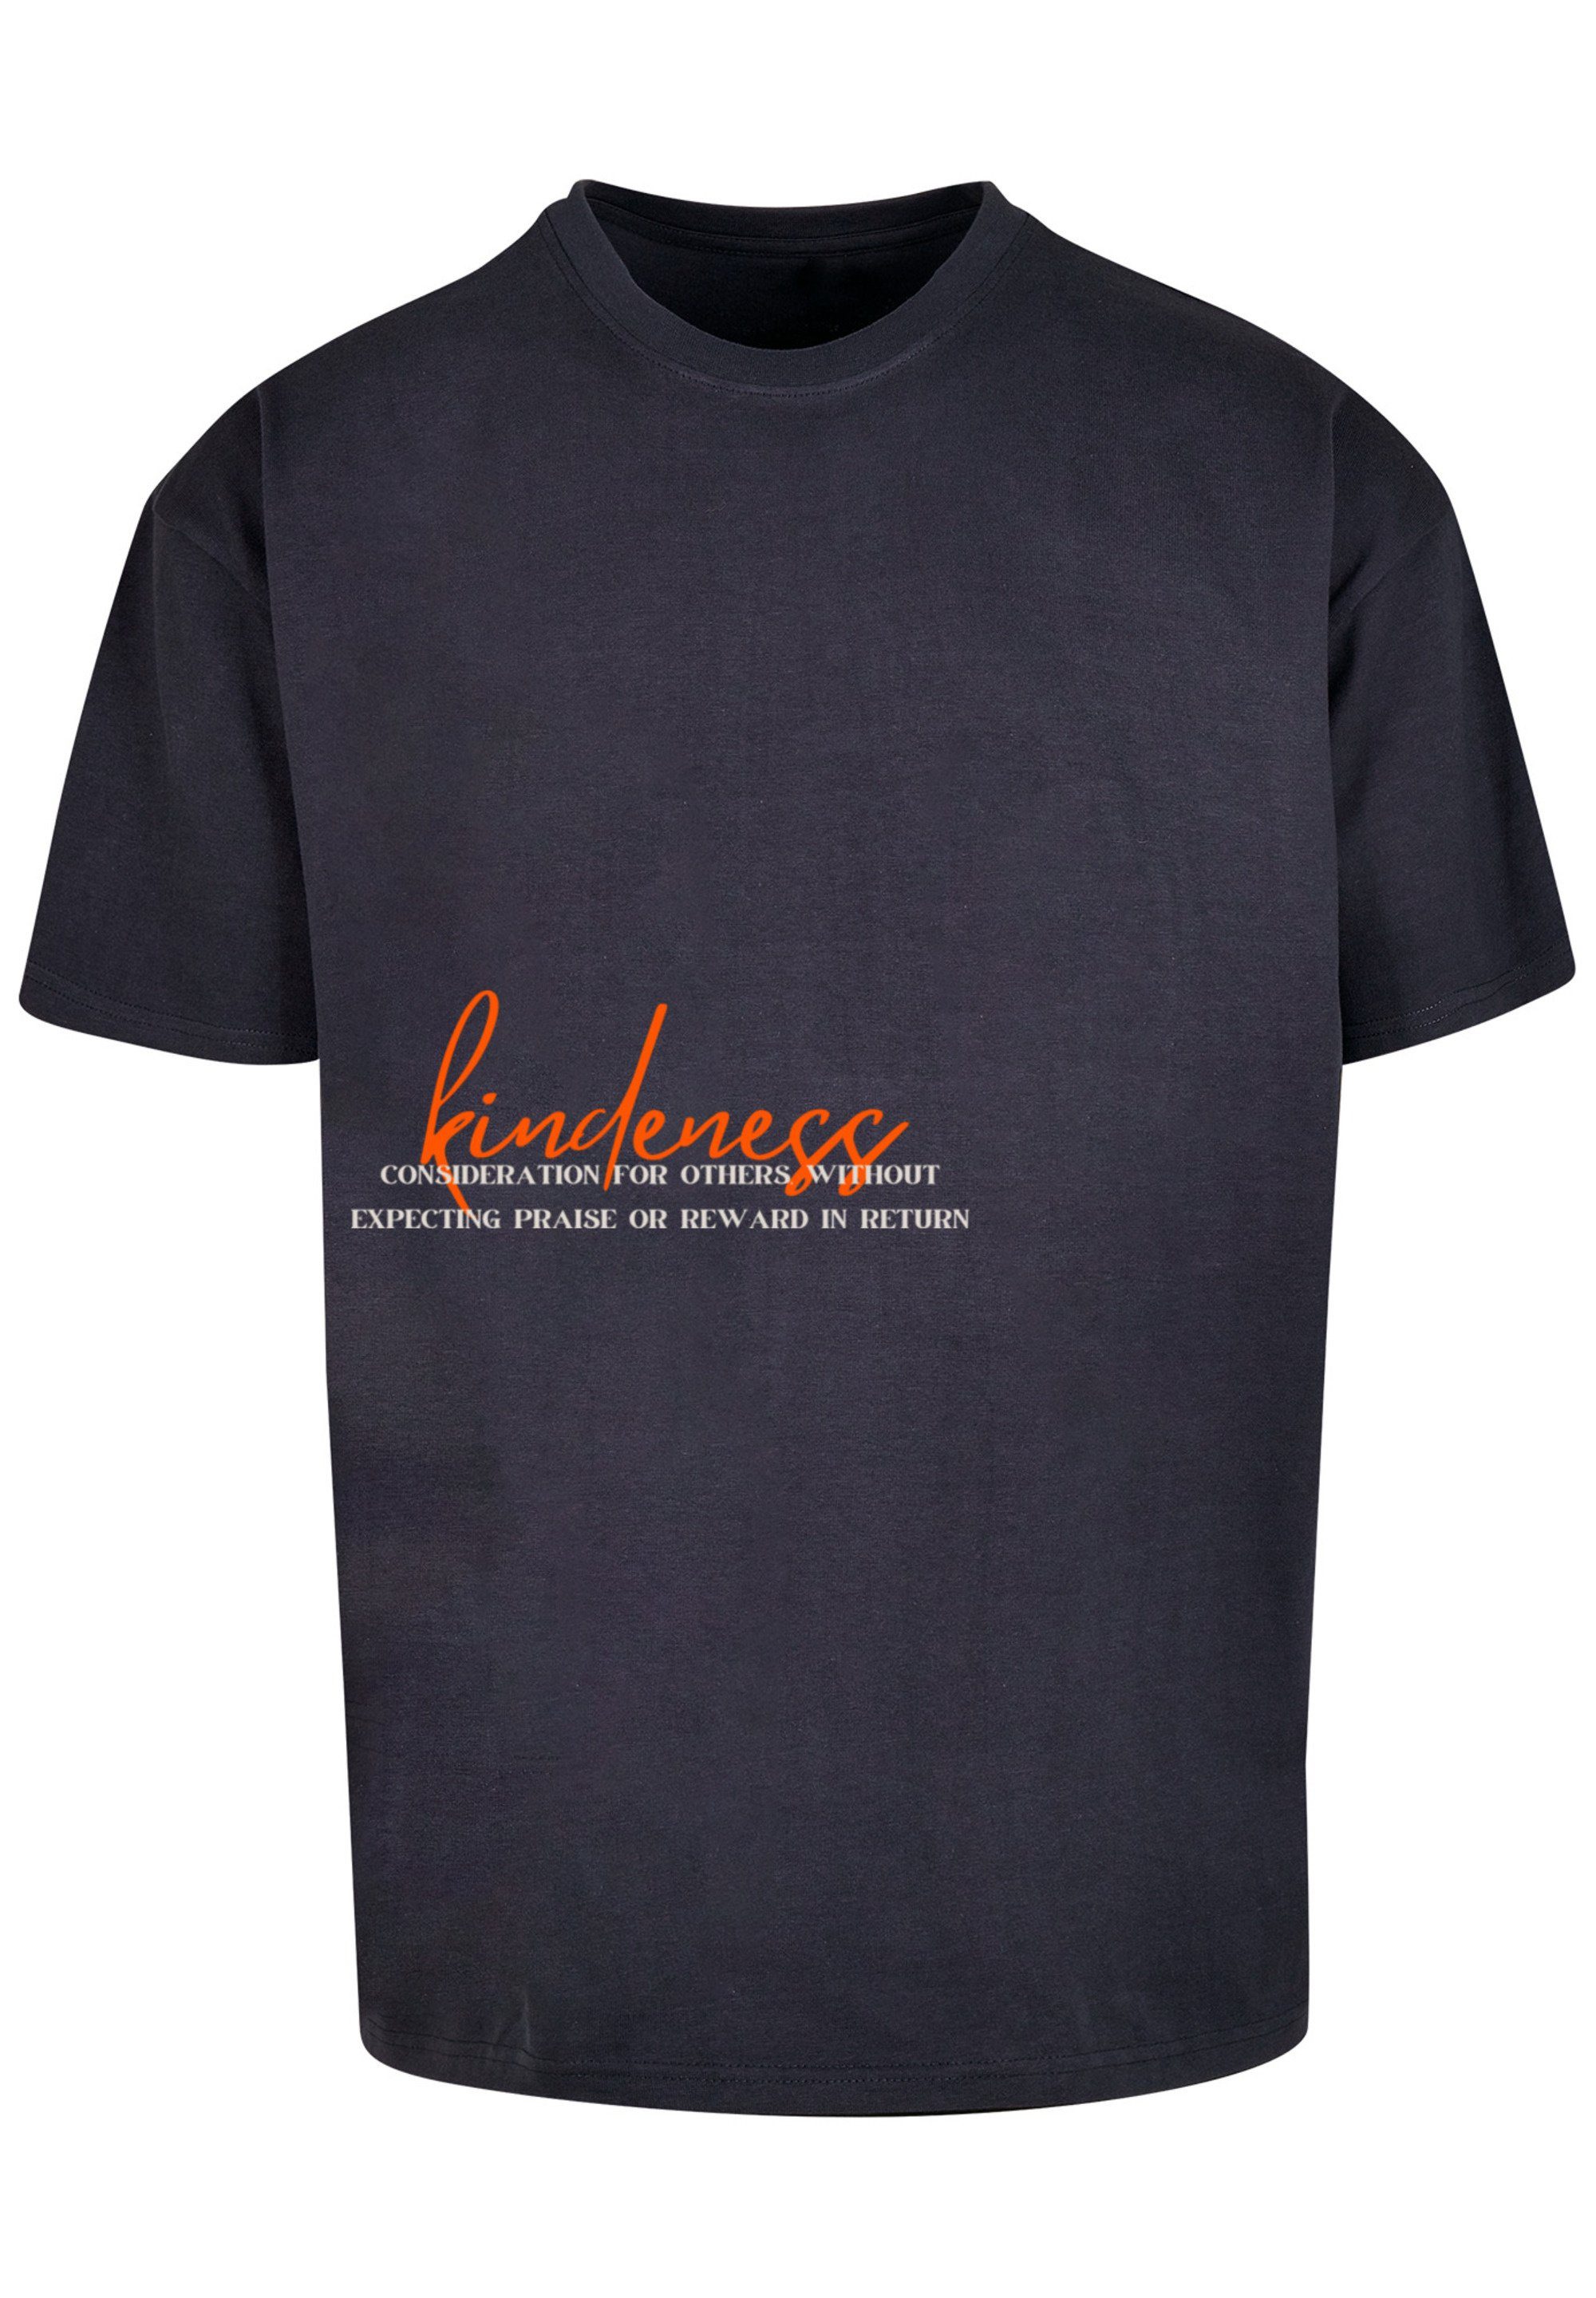 F4NT4STIC T-Shirt kindness OVERSIZE TEE Print navy